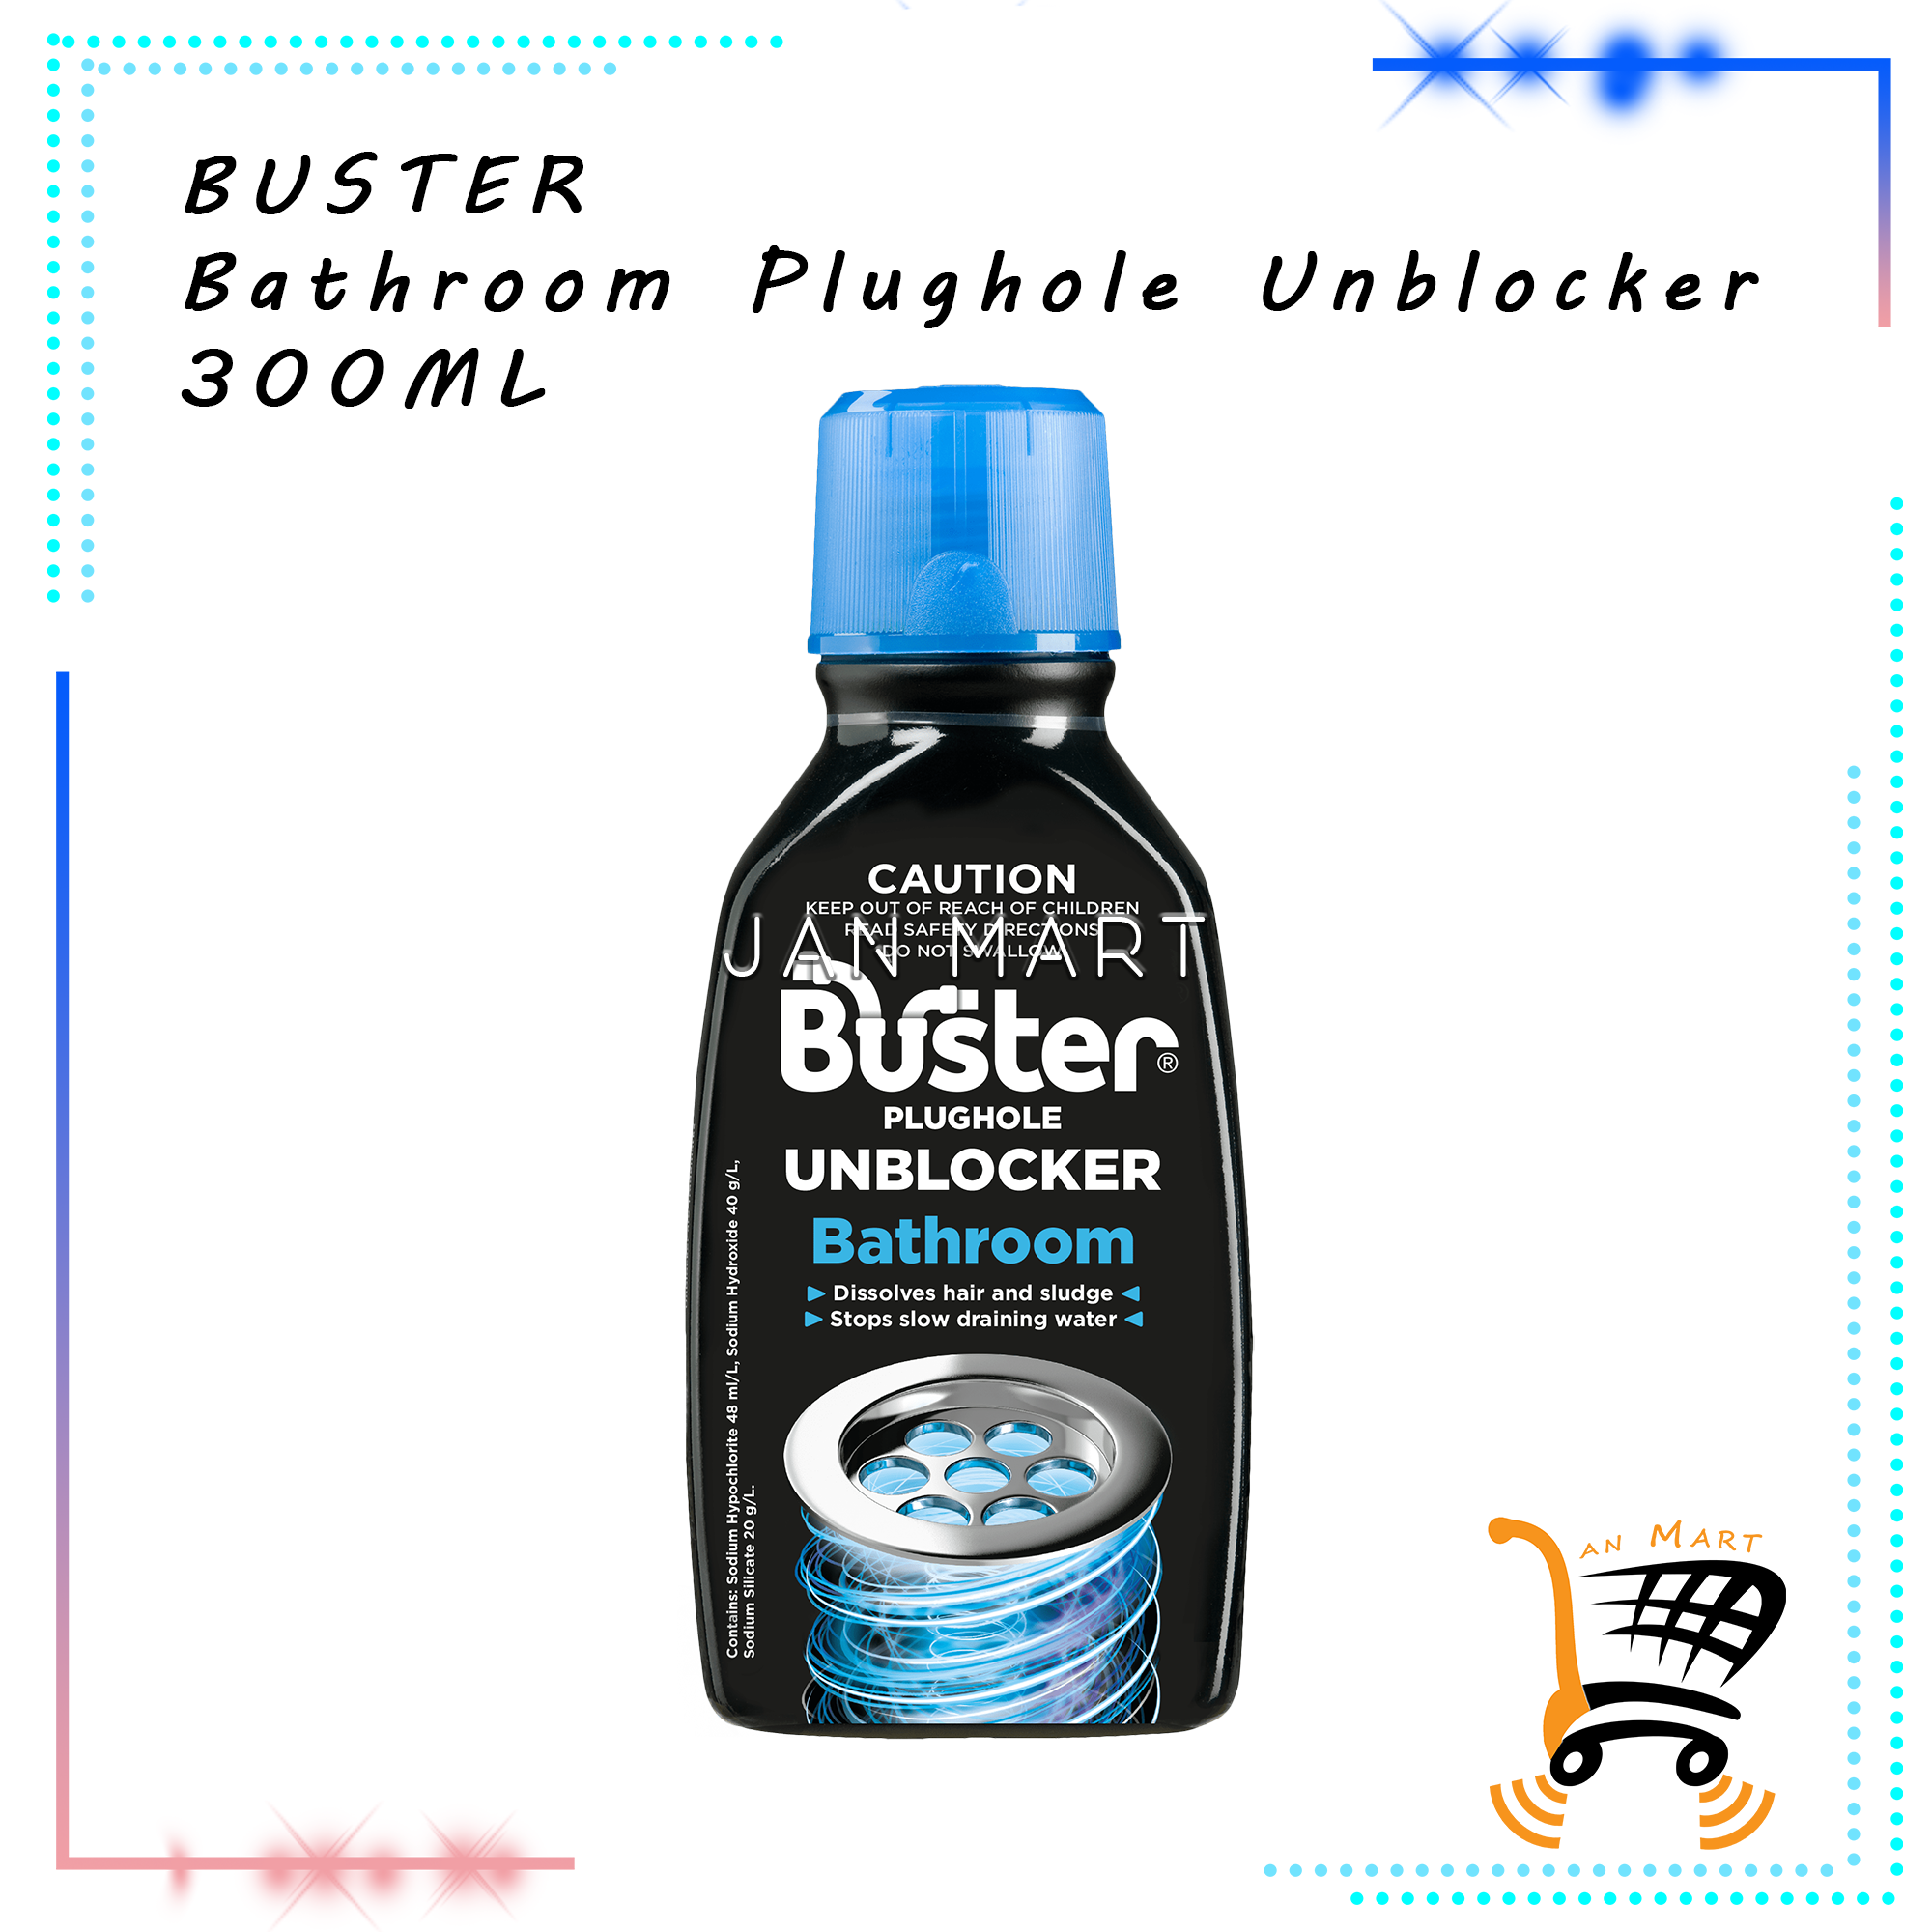 BUSTER Bathroom Sink Plughole Unblocker 300ML